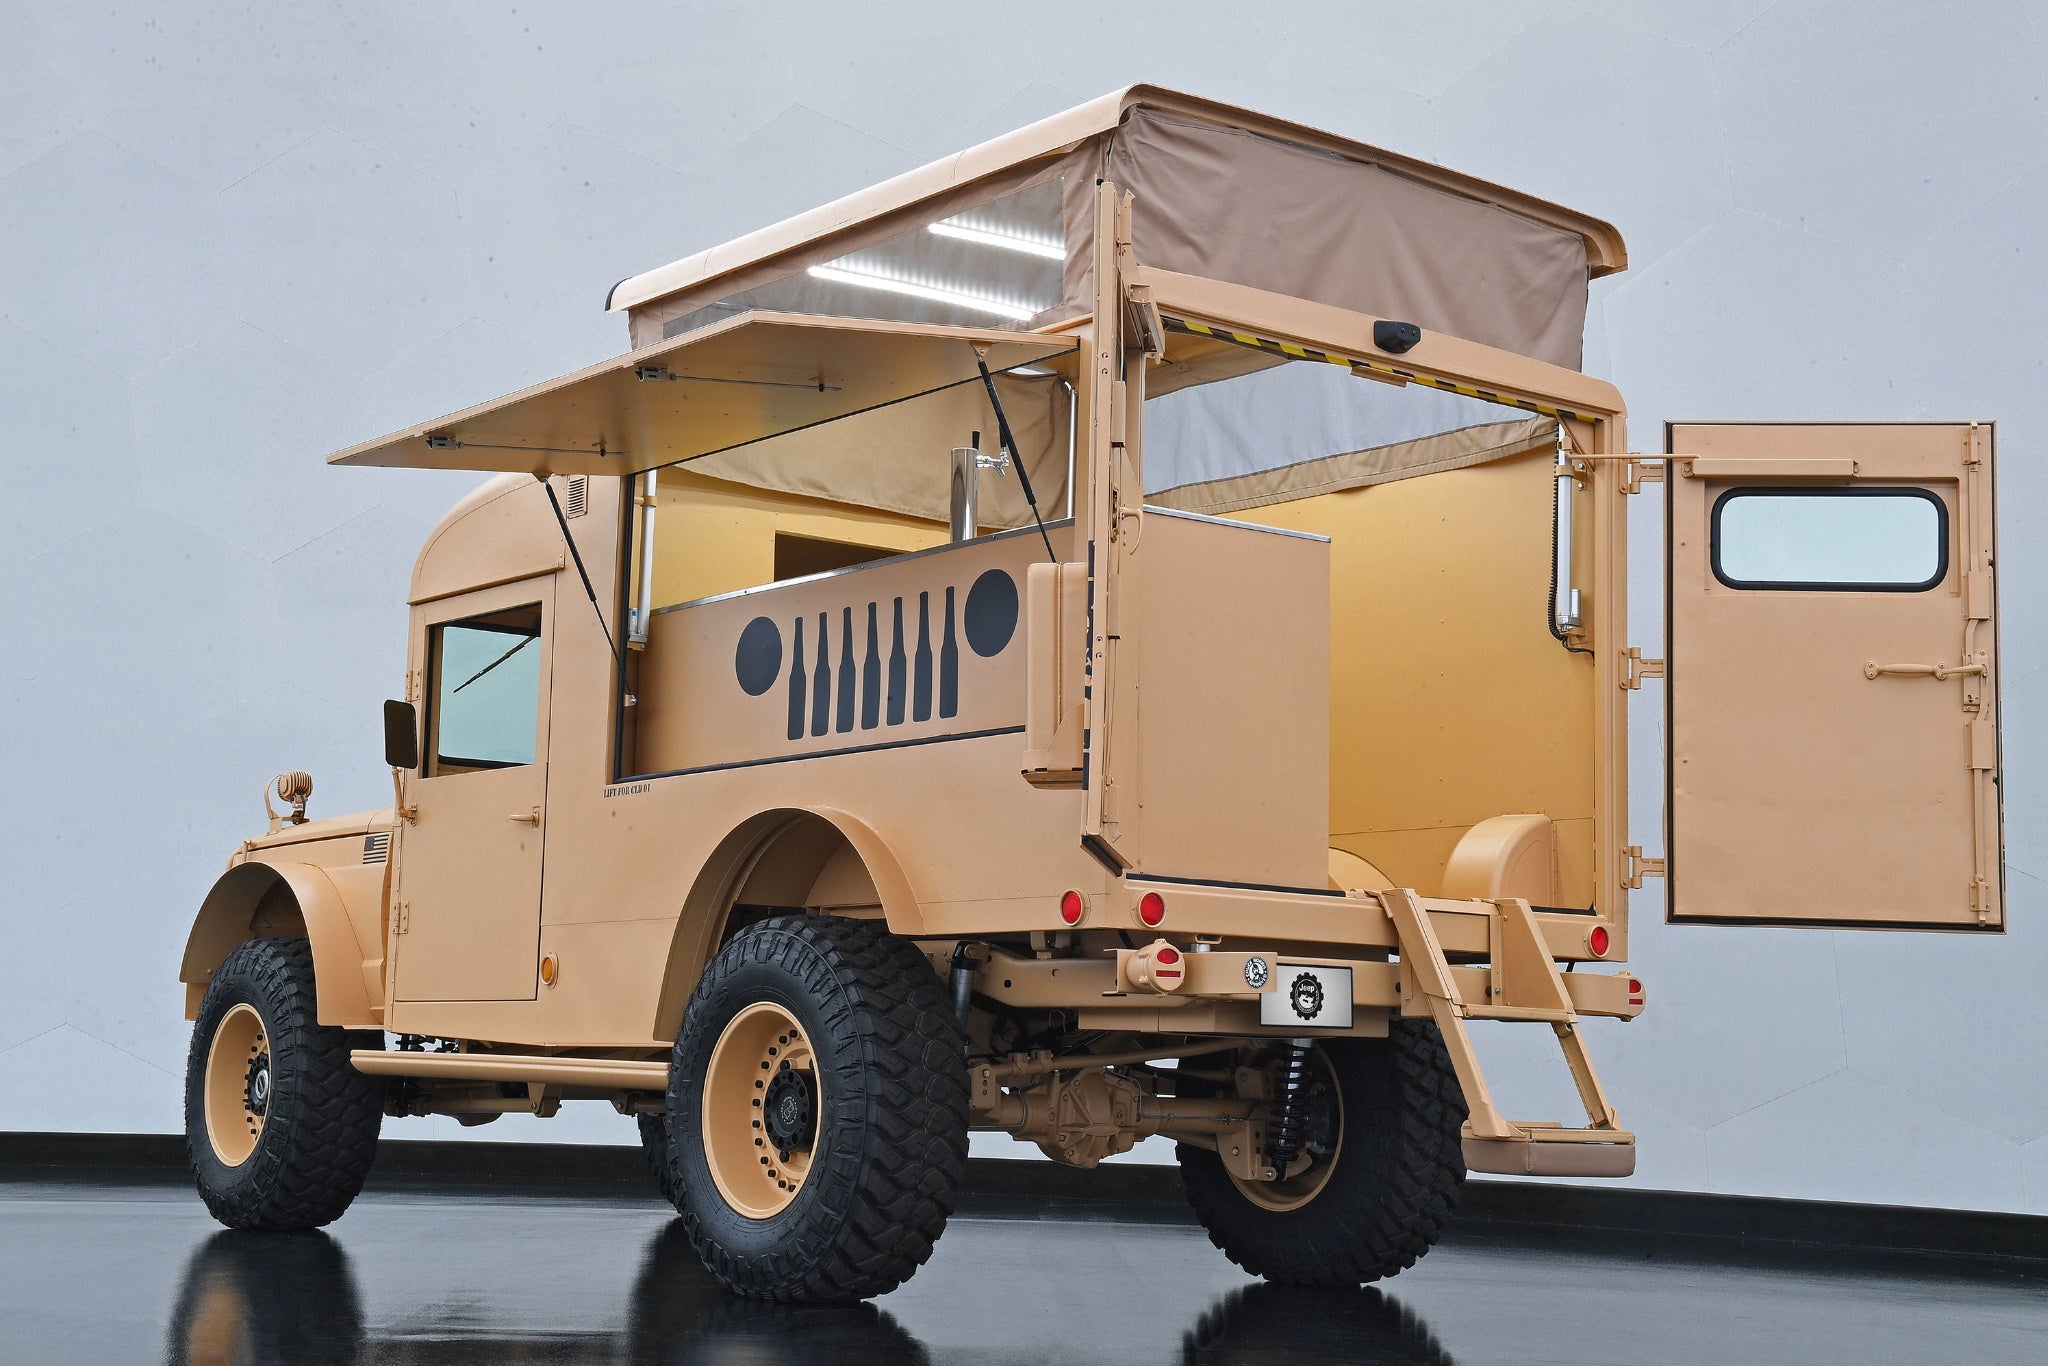 Jeep Experiments With Luxurious Three-Row Wrangler for SEMA